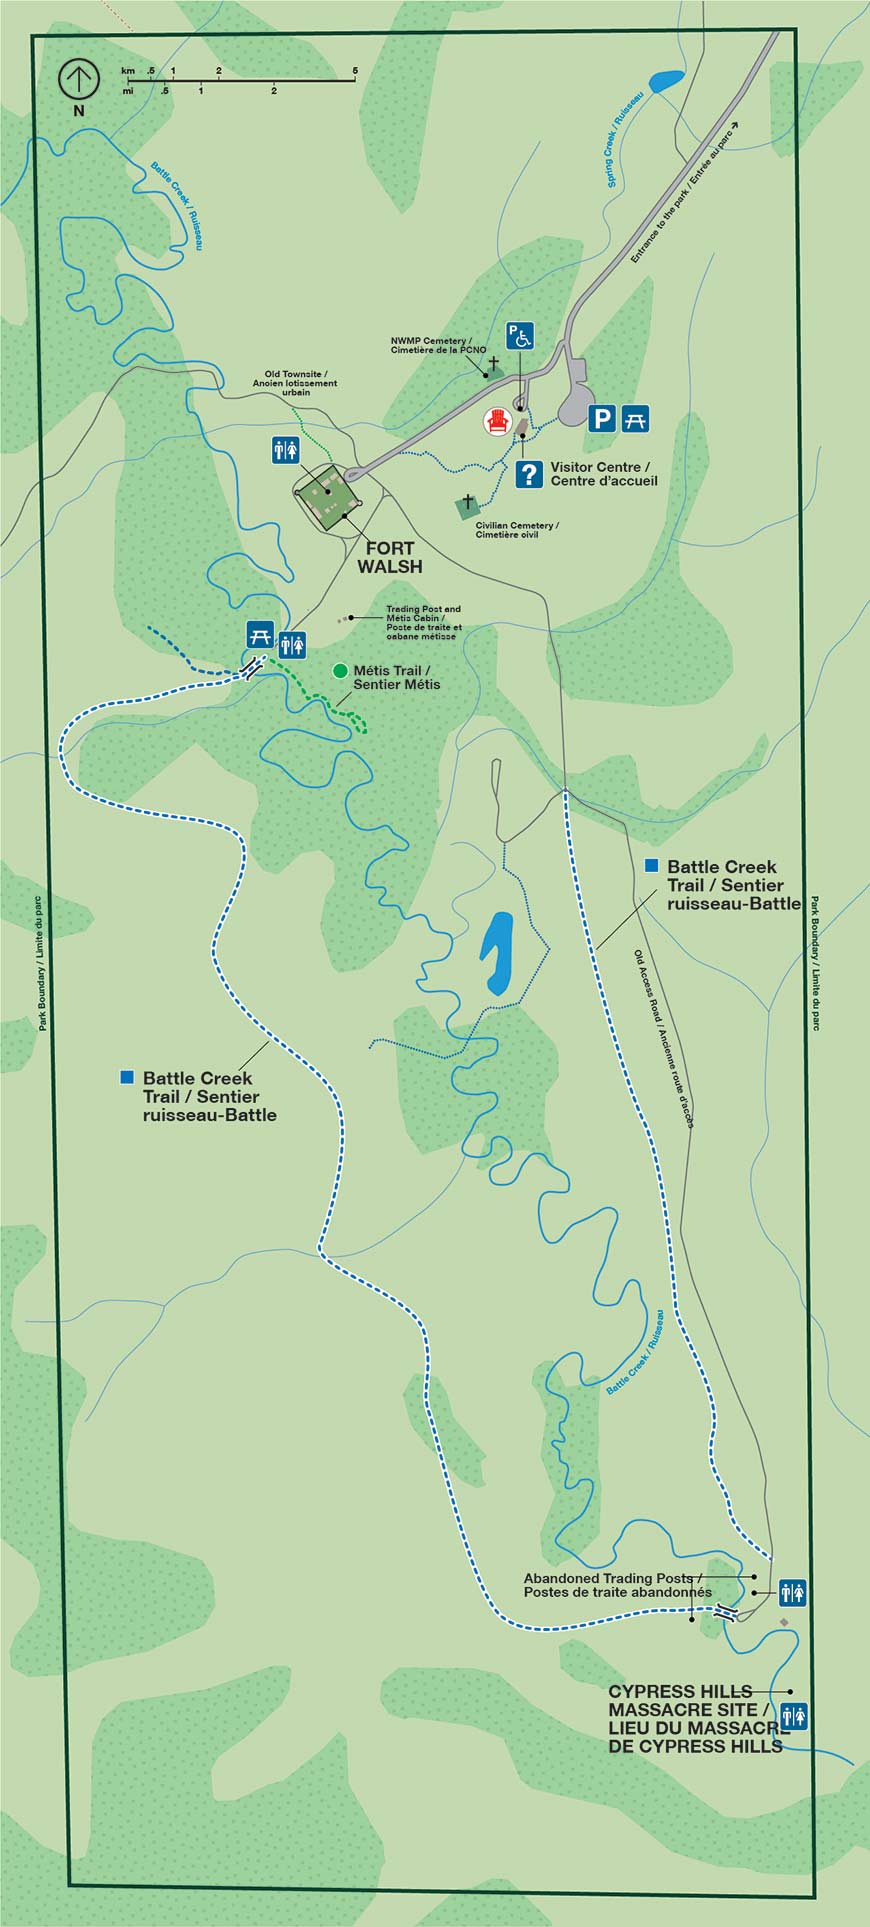 Fort Walsh carte des sentiers